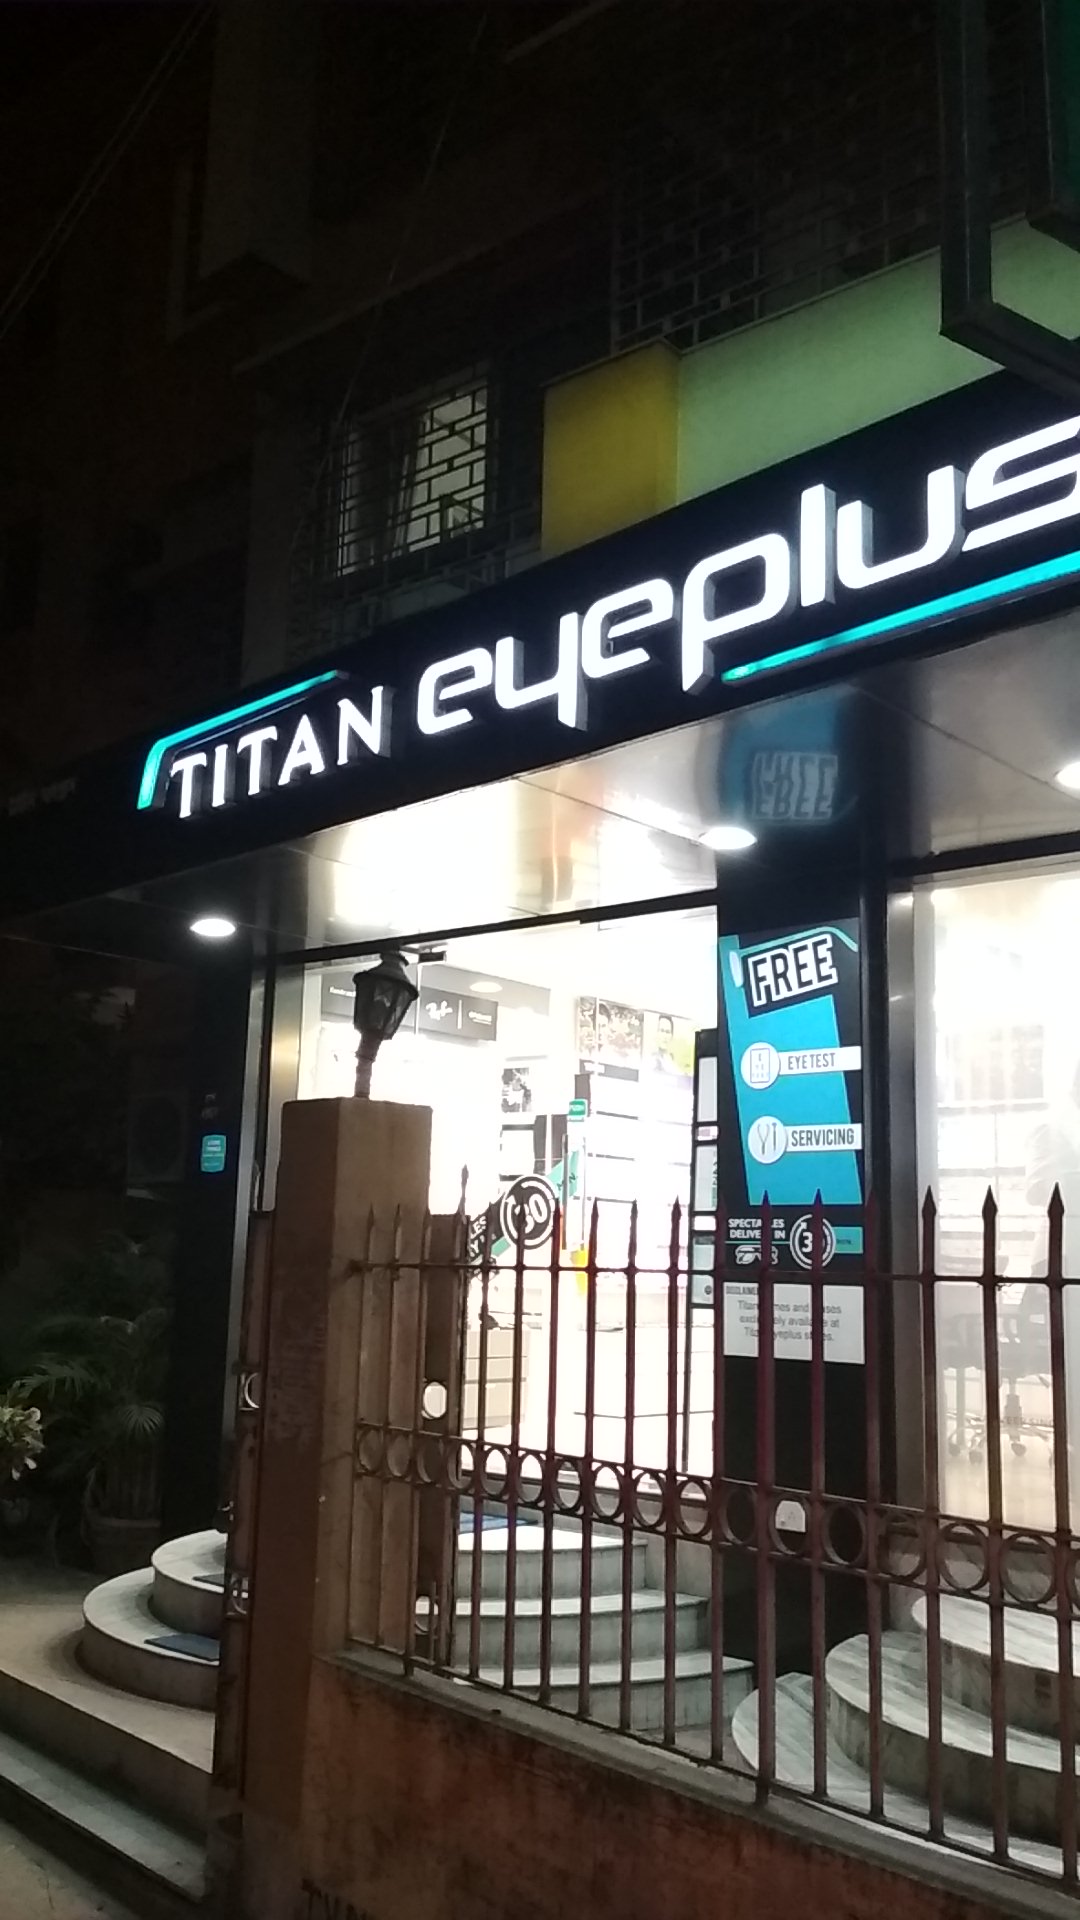 Titan Eye Gear Shop